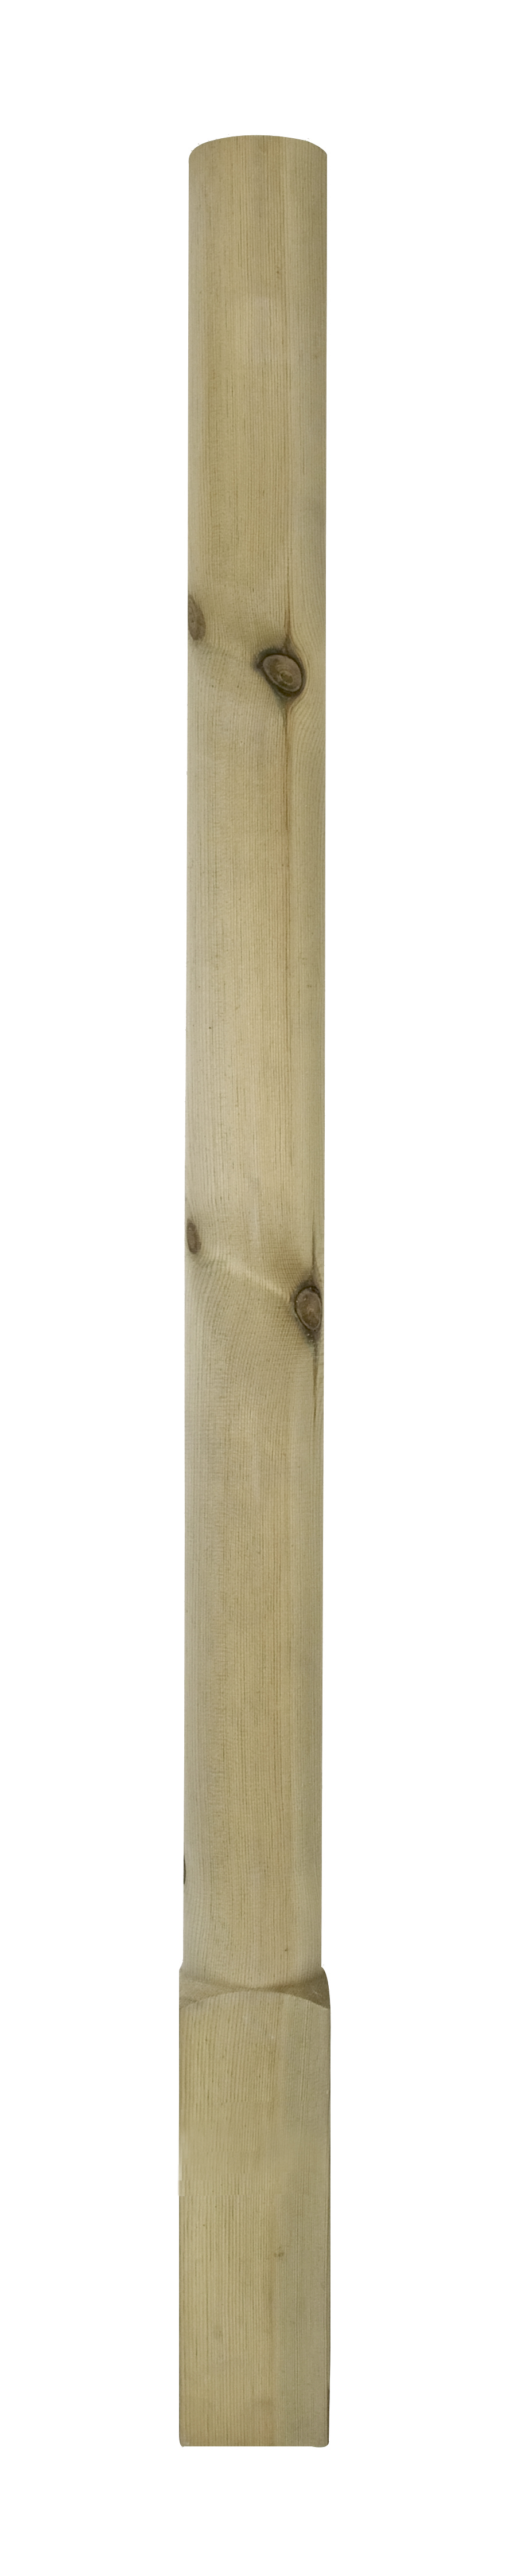 1 Softwood Round Newel 1375mm